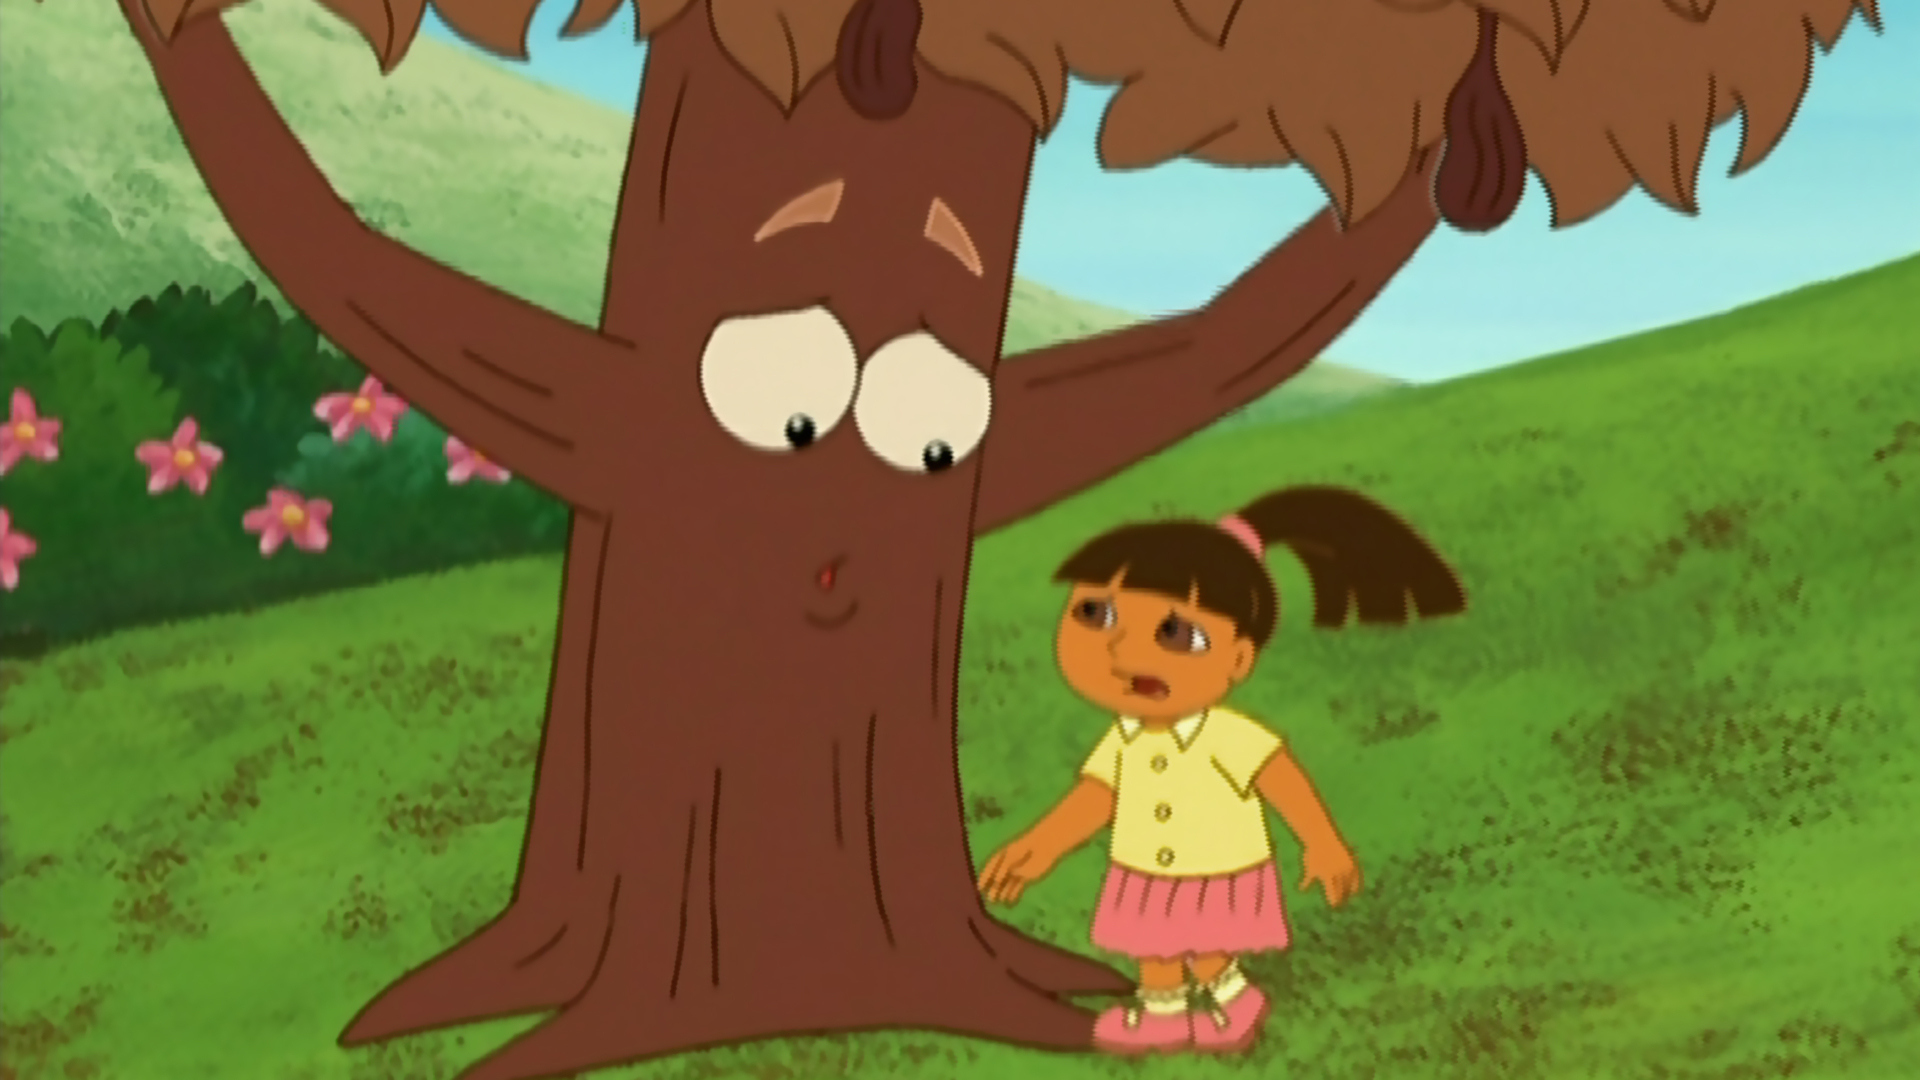 Dora The Explorer The Chocolate Tree